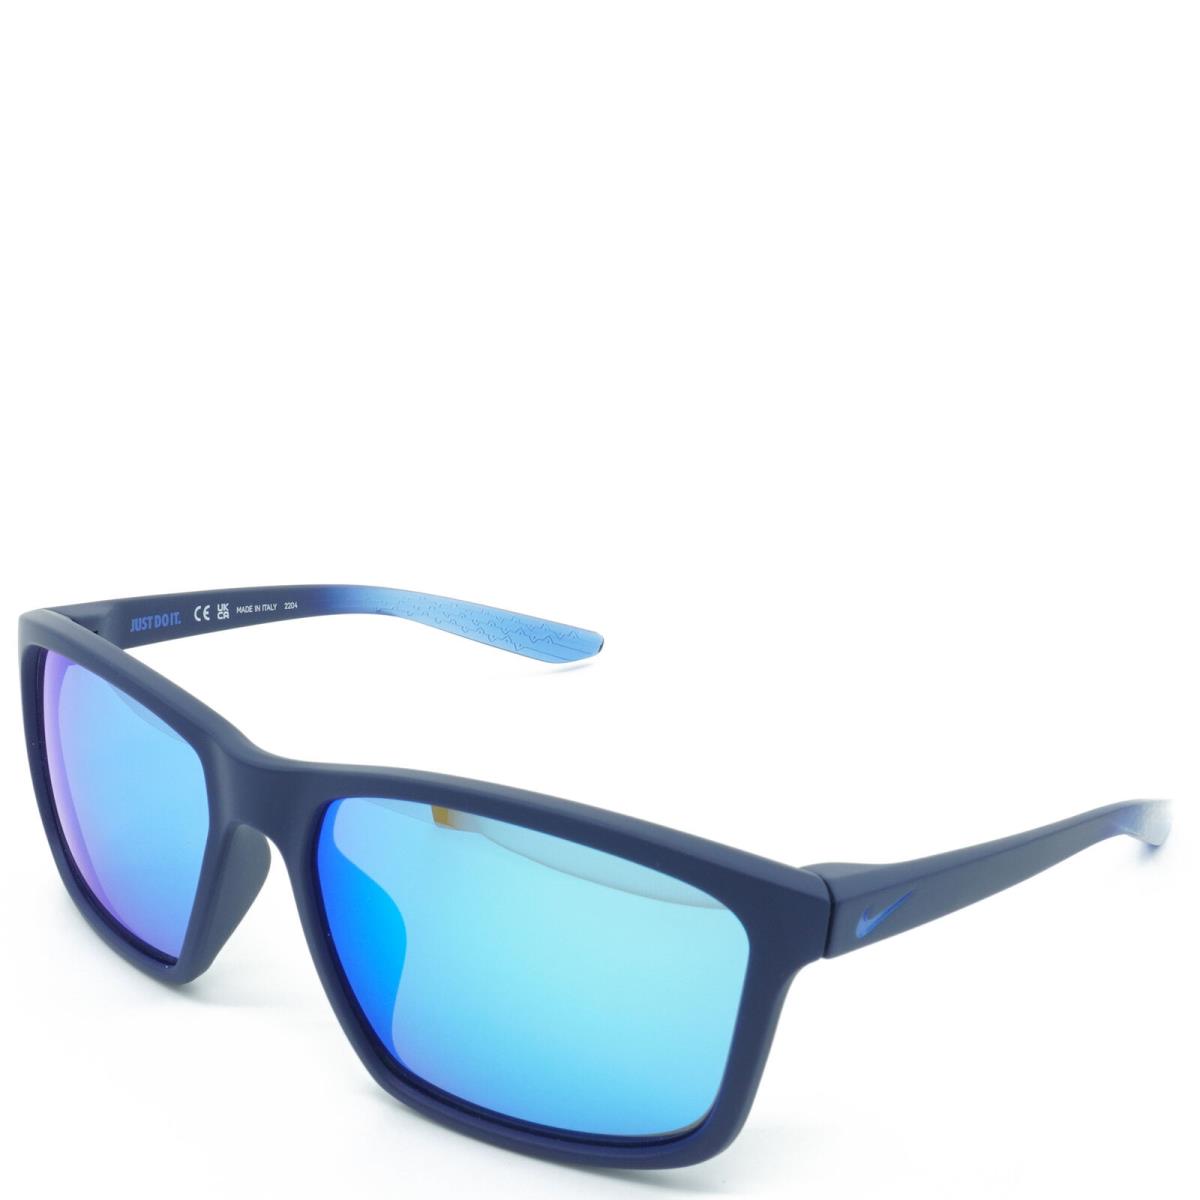 CW4642-410 Mens Nike Valiant M Sunglasses - Frame: Matte Blue, Lens: Blue Mirror